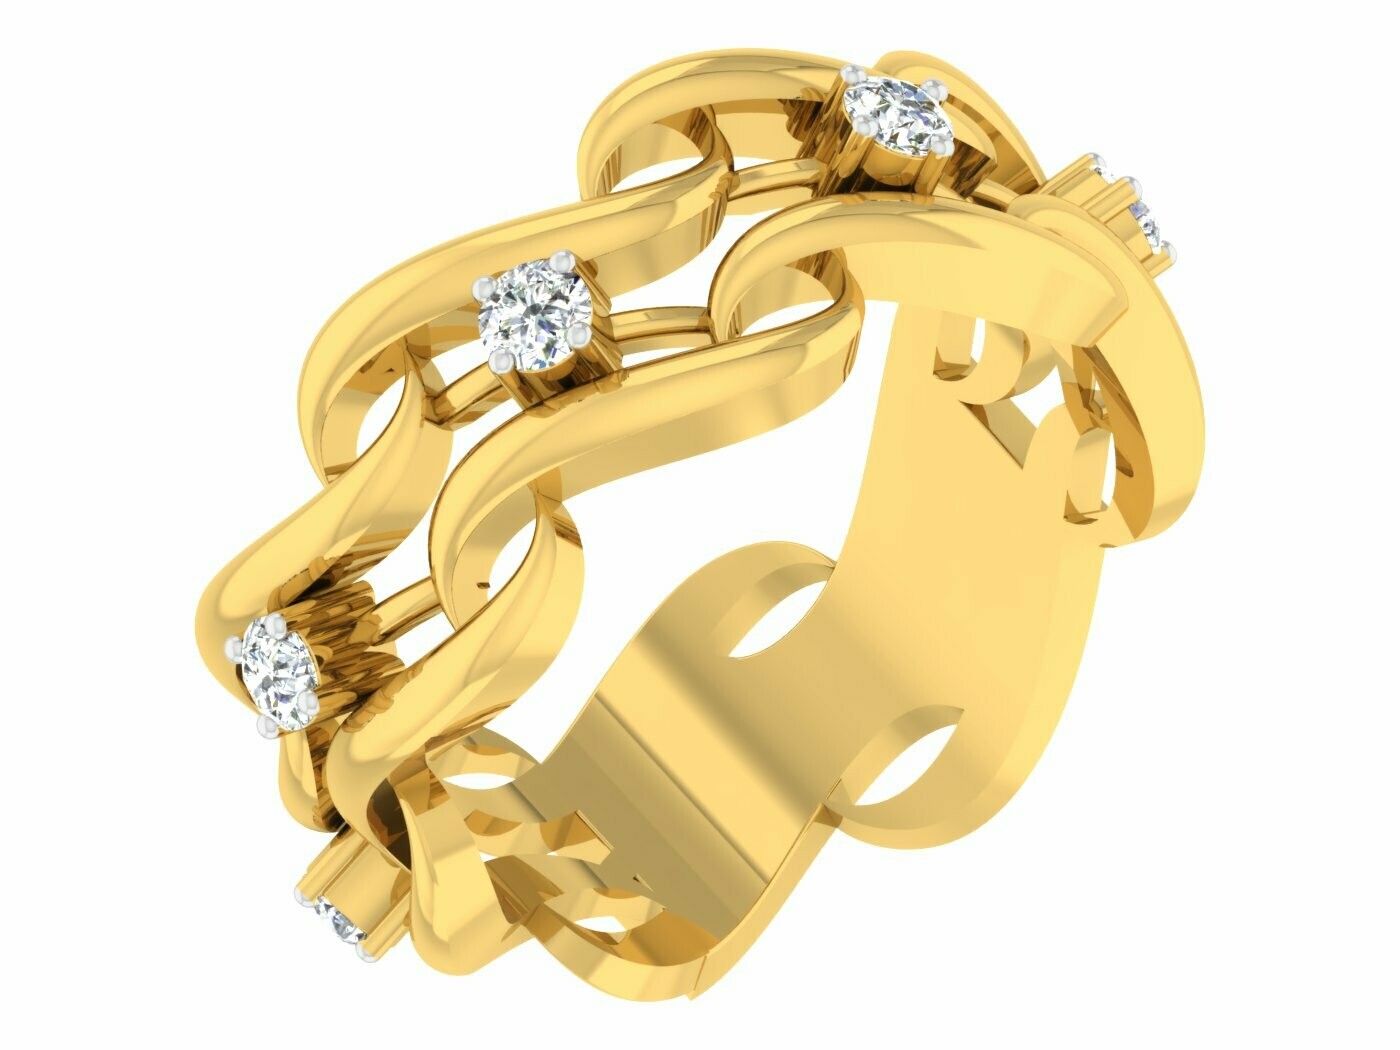 3Д файл, ювелирное кольцо с бриллиантами, помолвочное кольцо